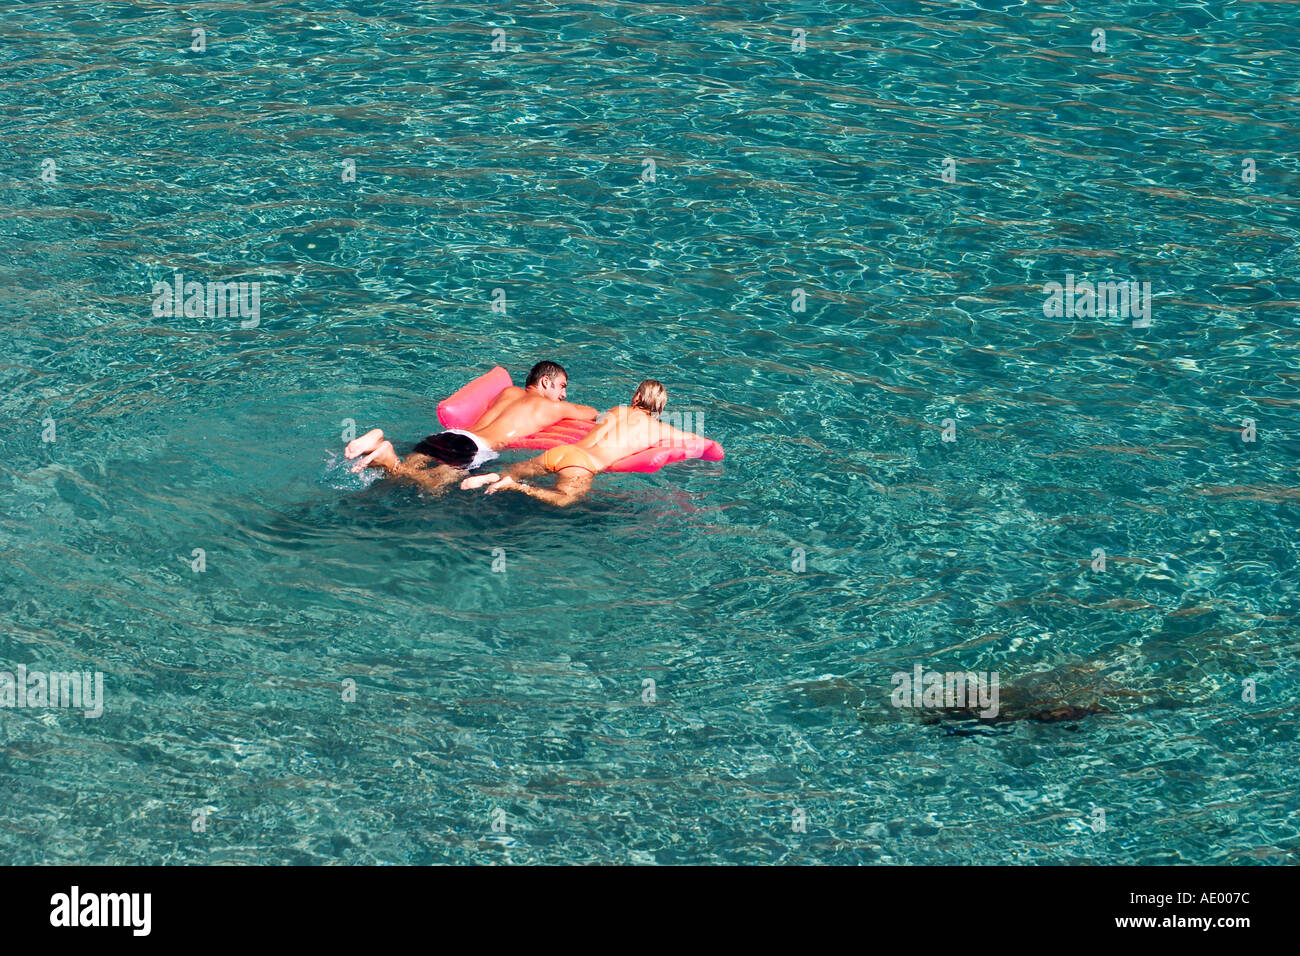 swimmers on airbed in Cala de Boix near Santa Eularia on Ibiza Stock Photo